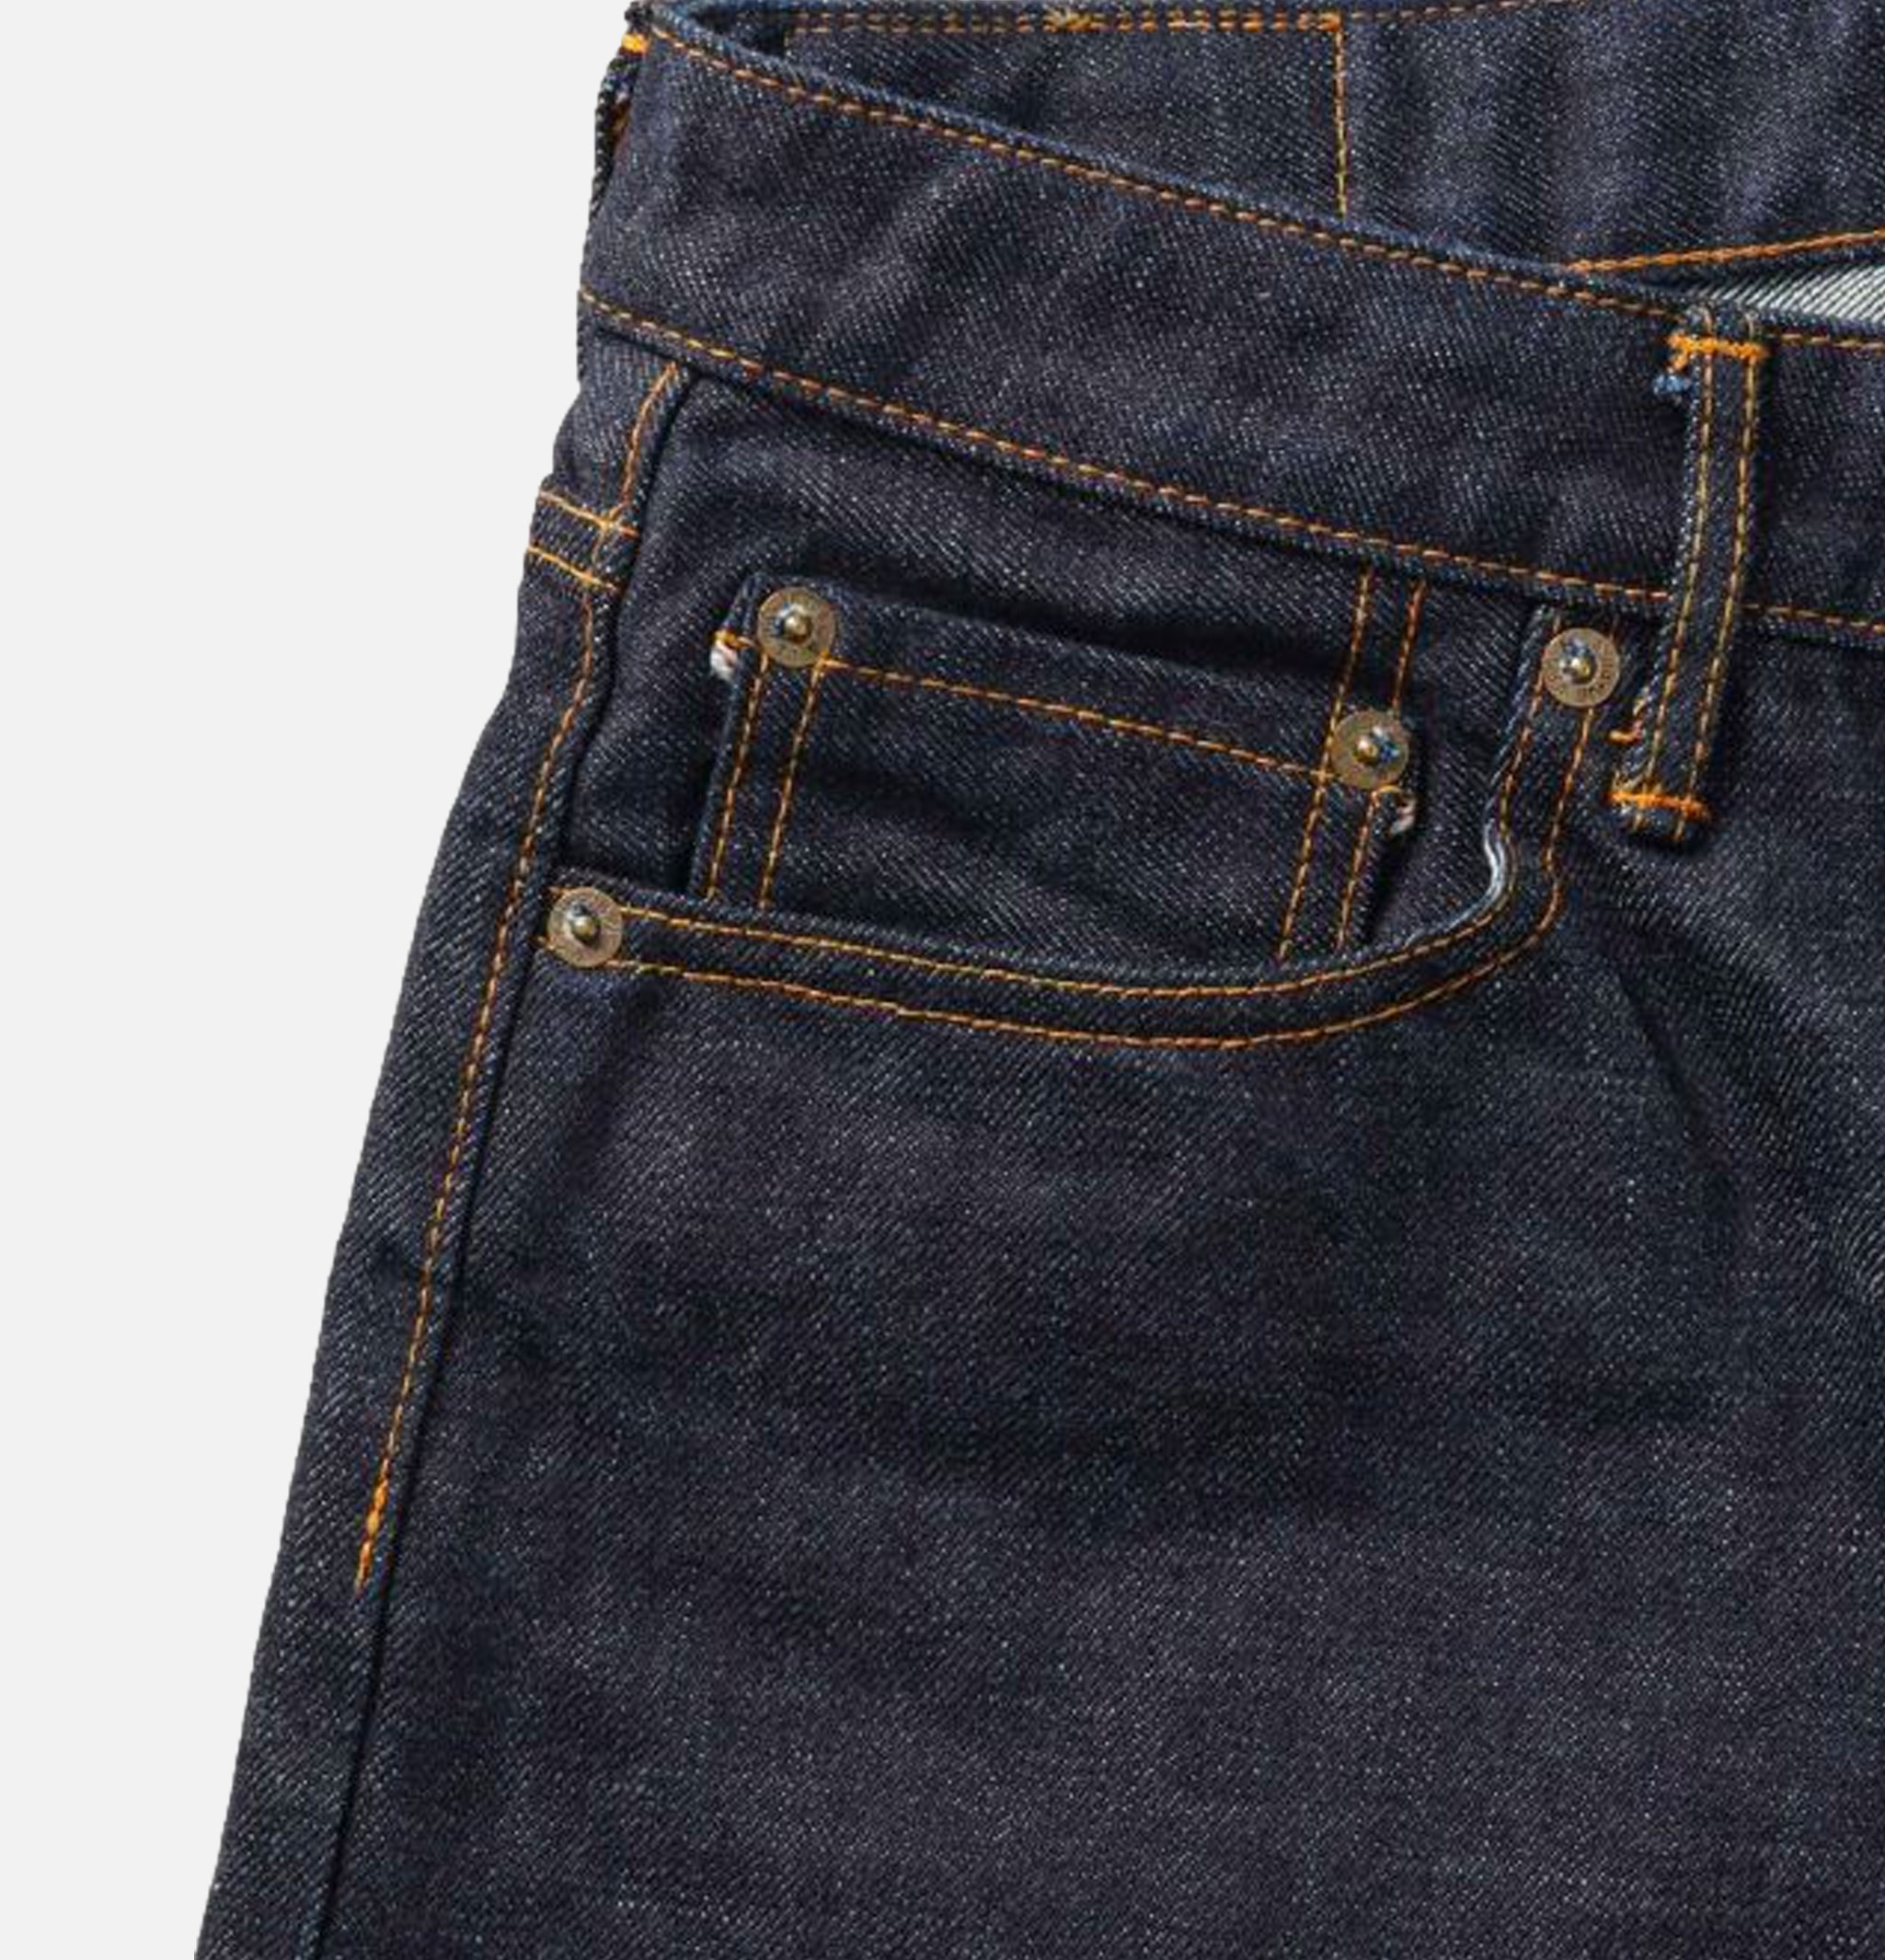 Japan Blue Jeans 14.8 Oz Loose Straight Blue